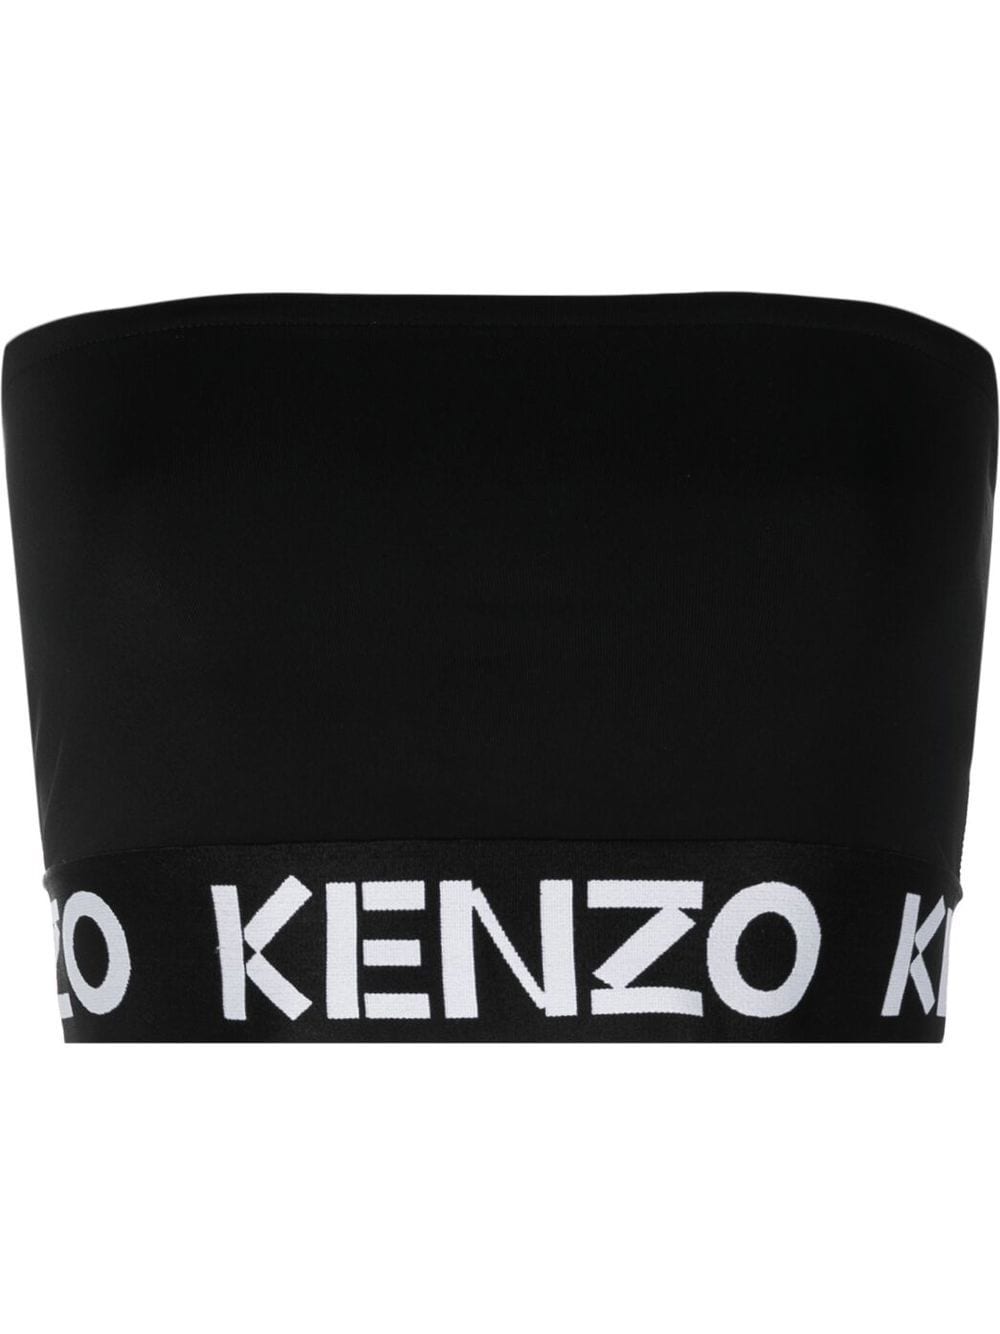 KENZO BLACK LOGO TOP